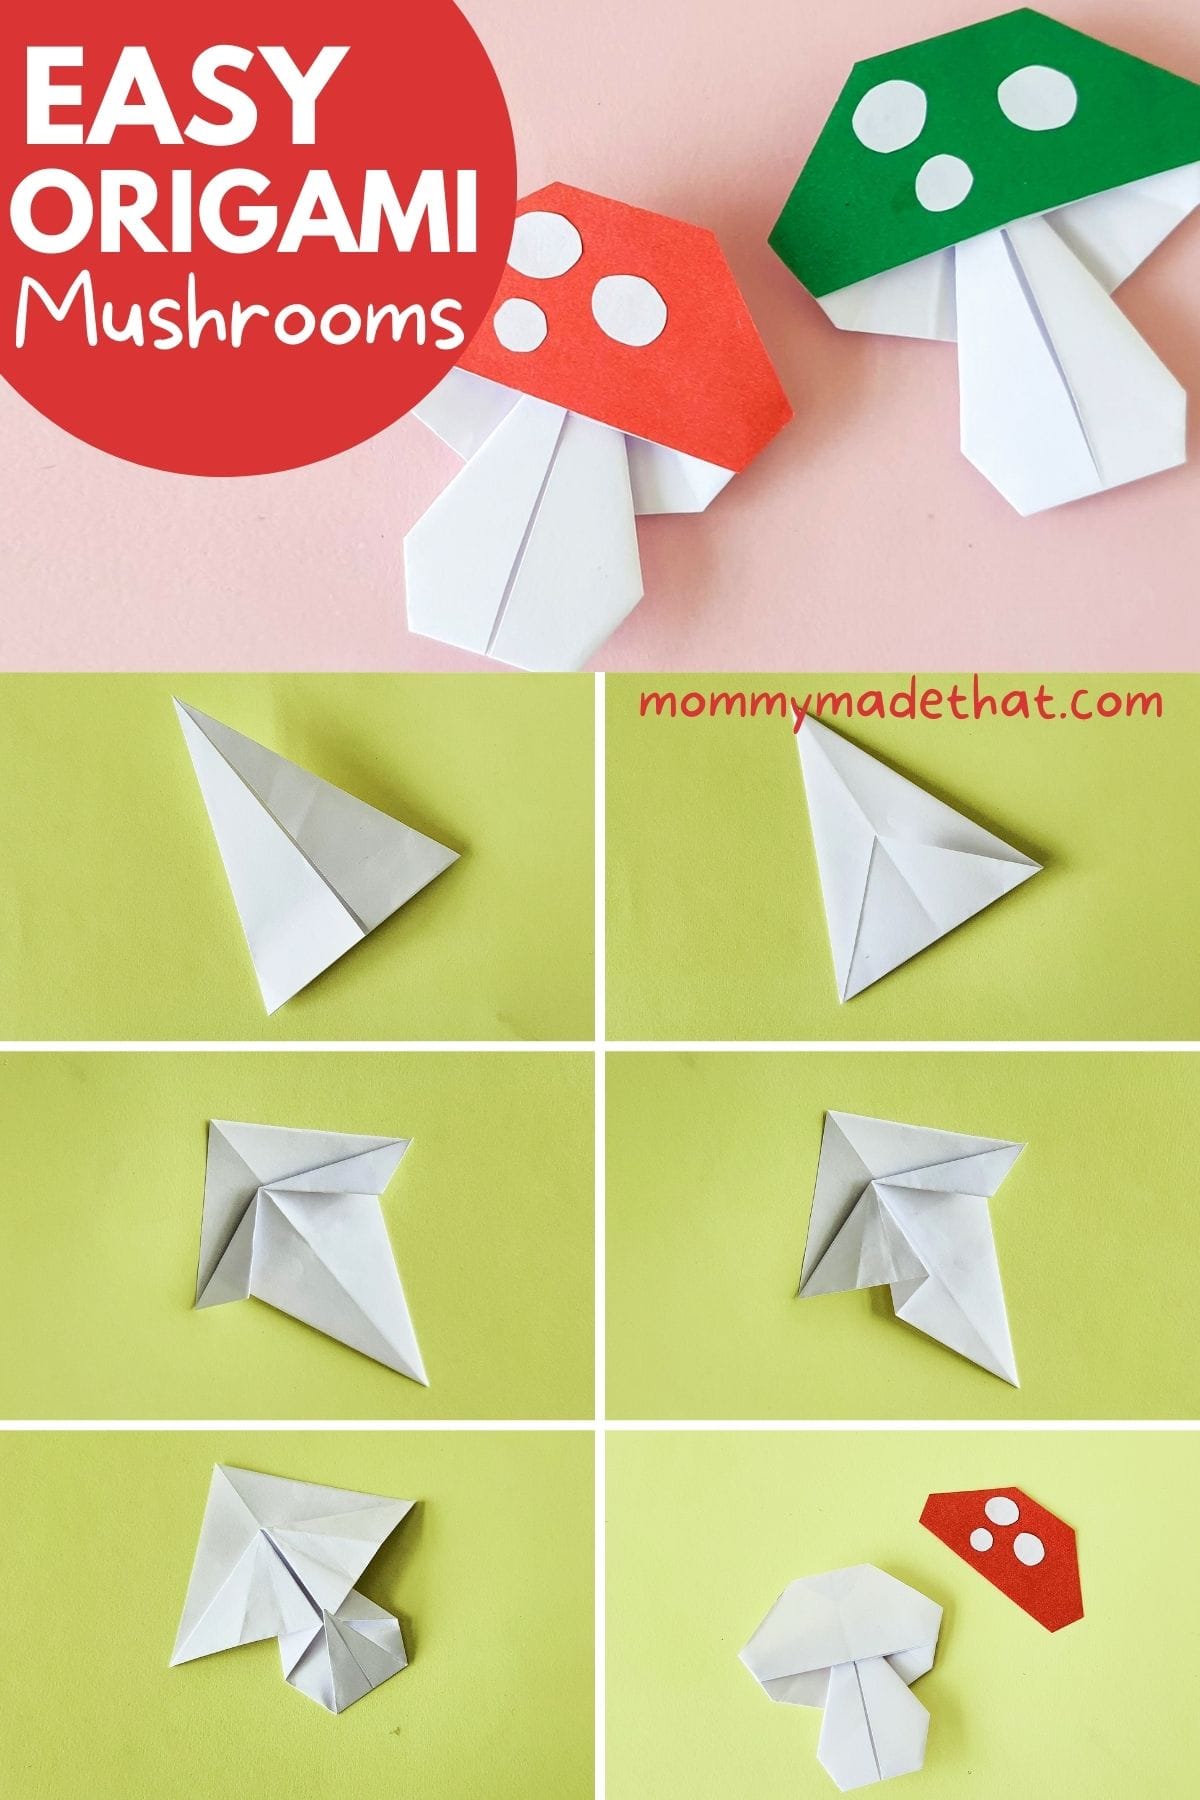 Easy origami mushrooms